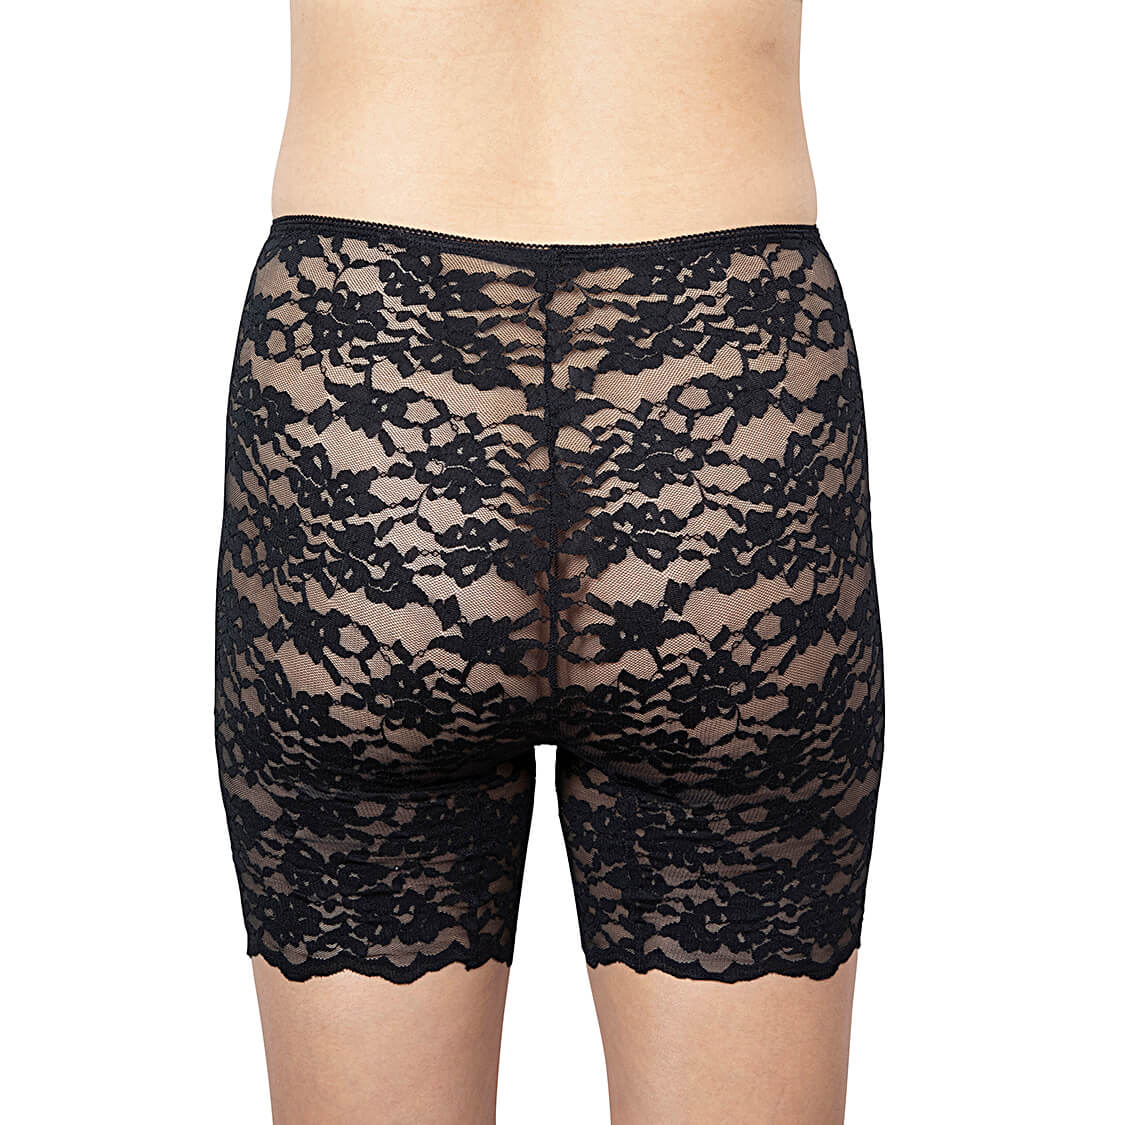 Lace Frilly Hotpants, Ruffled Panty Shorts︱StarlineLingerie – StarRivera